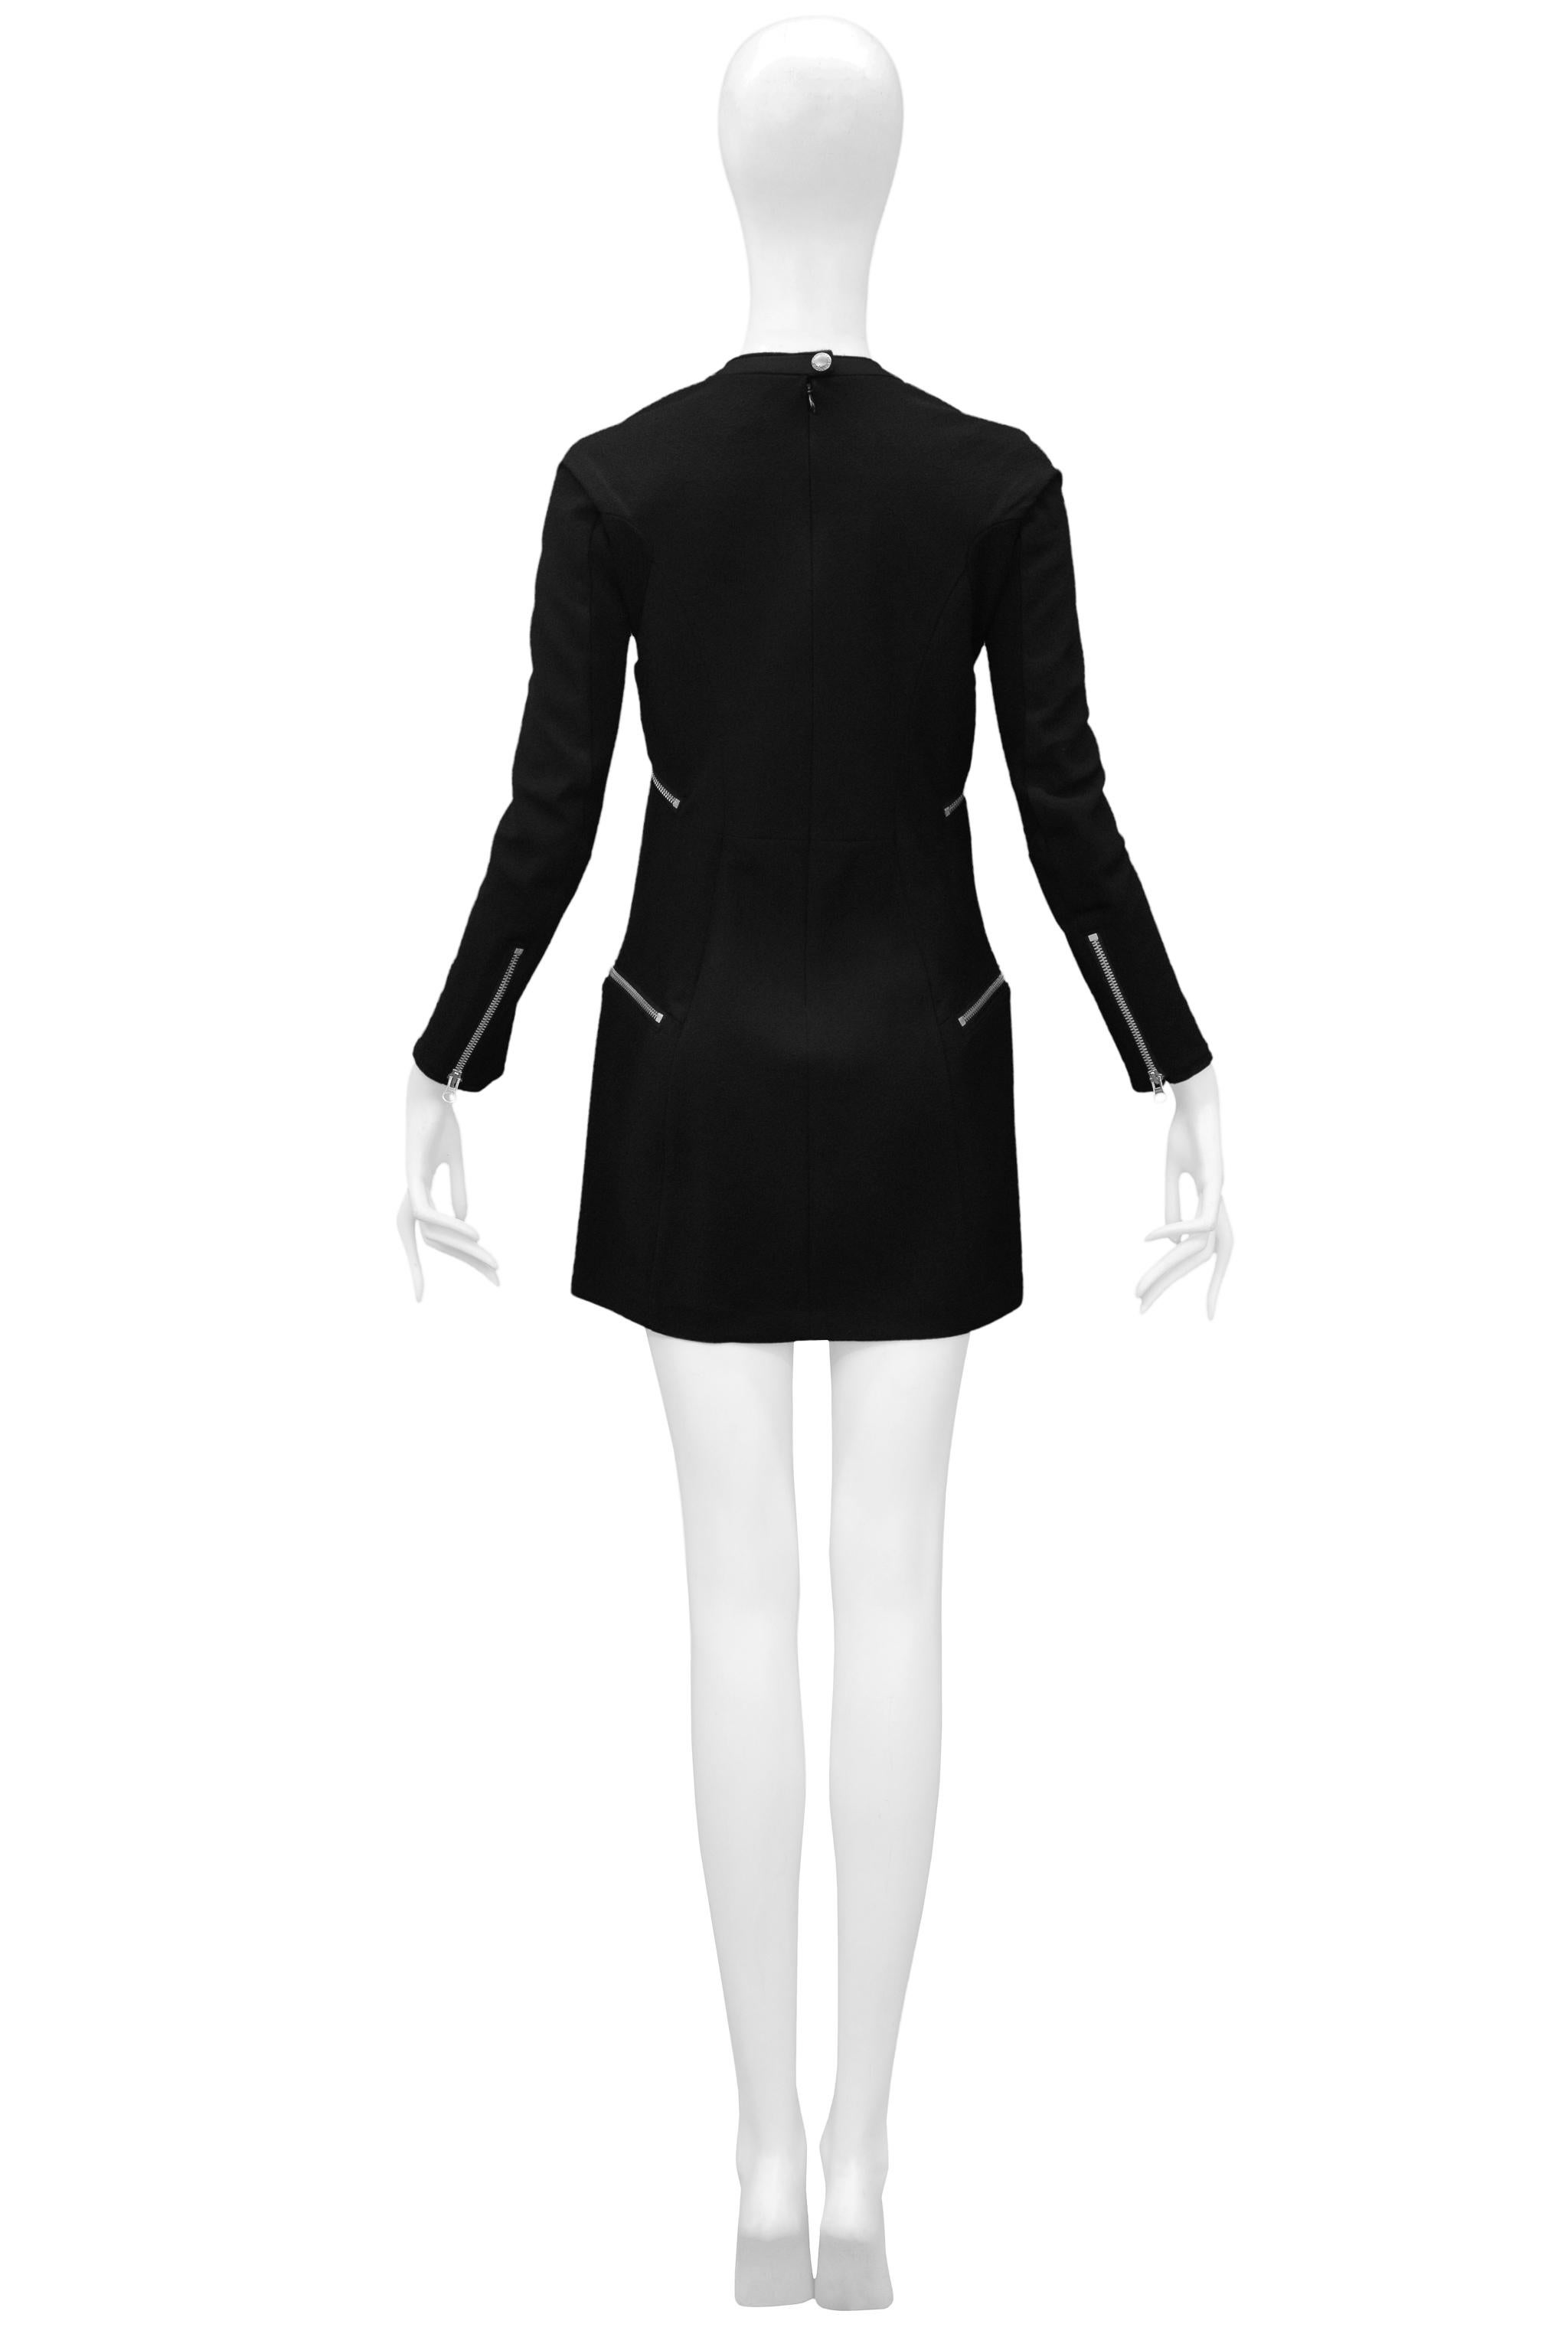 Junya Watanabe Black Wool Zipper Dress 2013 For Sale 1